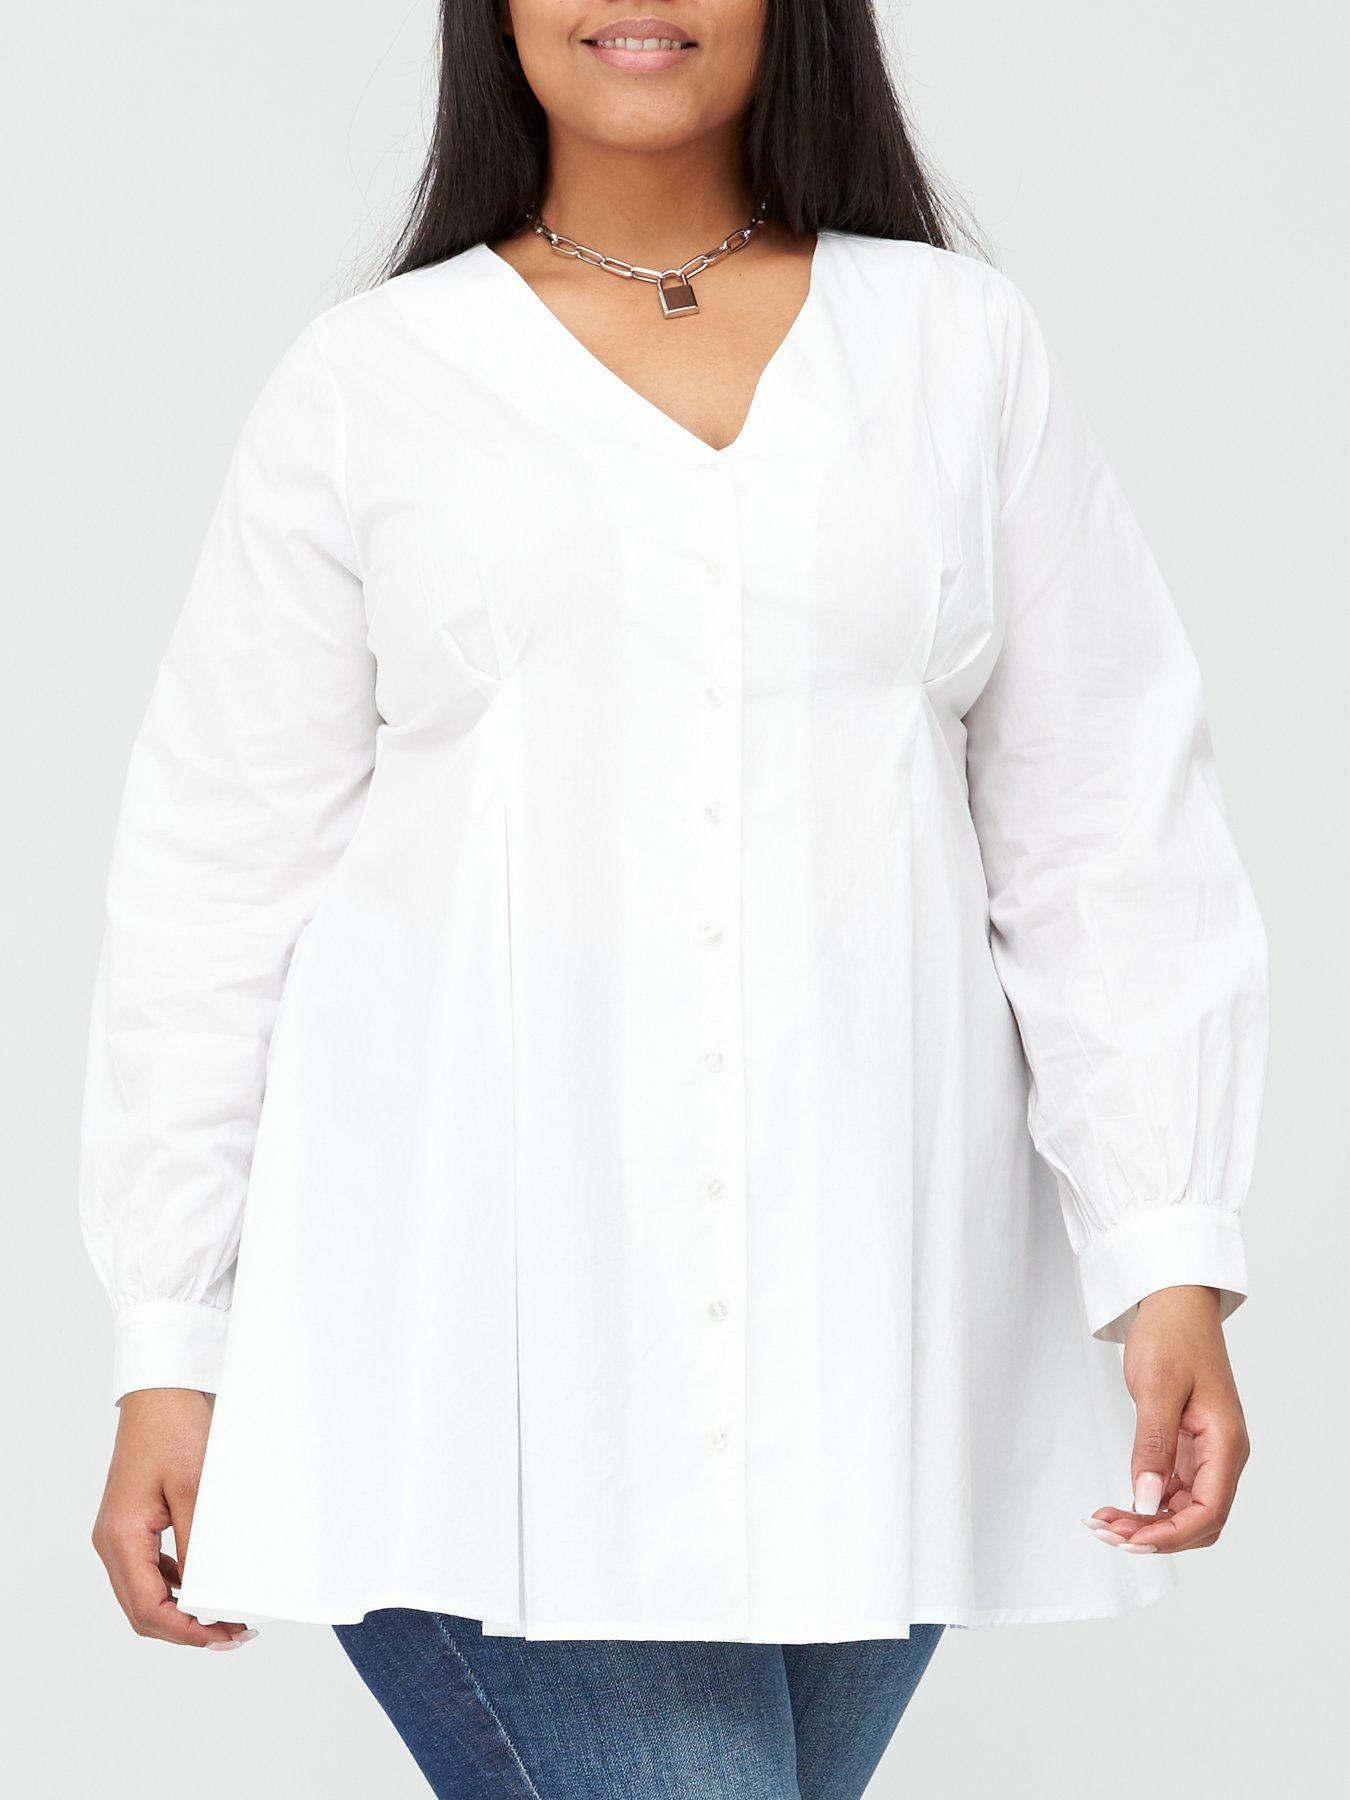 plus size white blouses uk